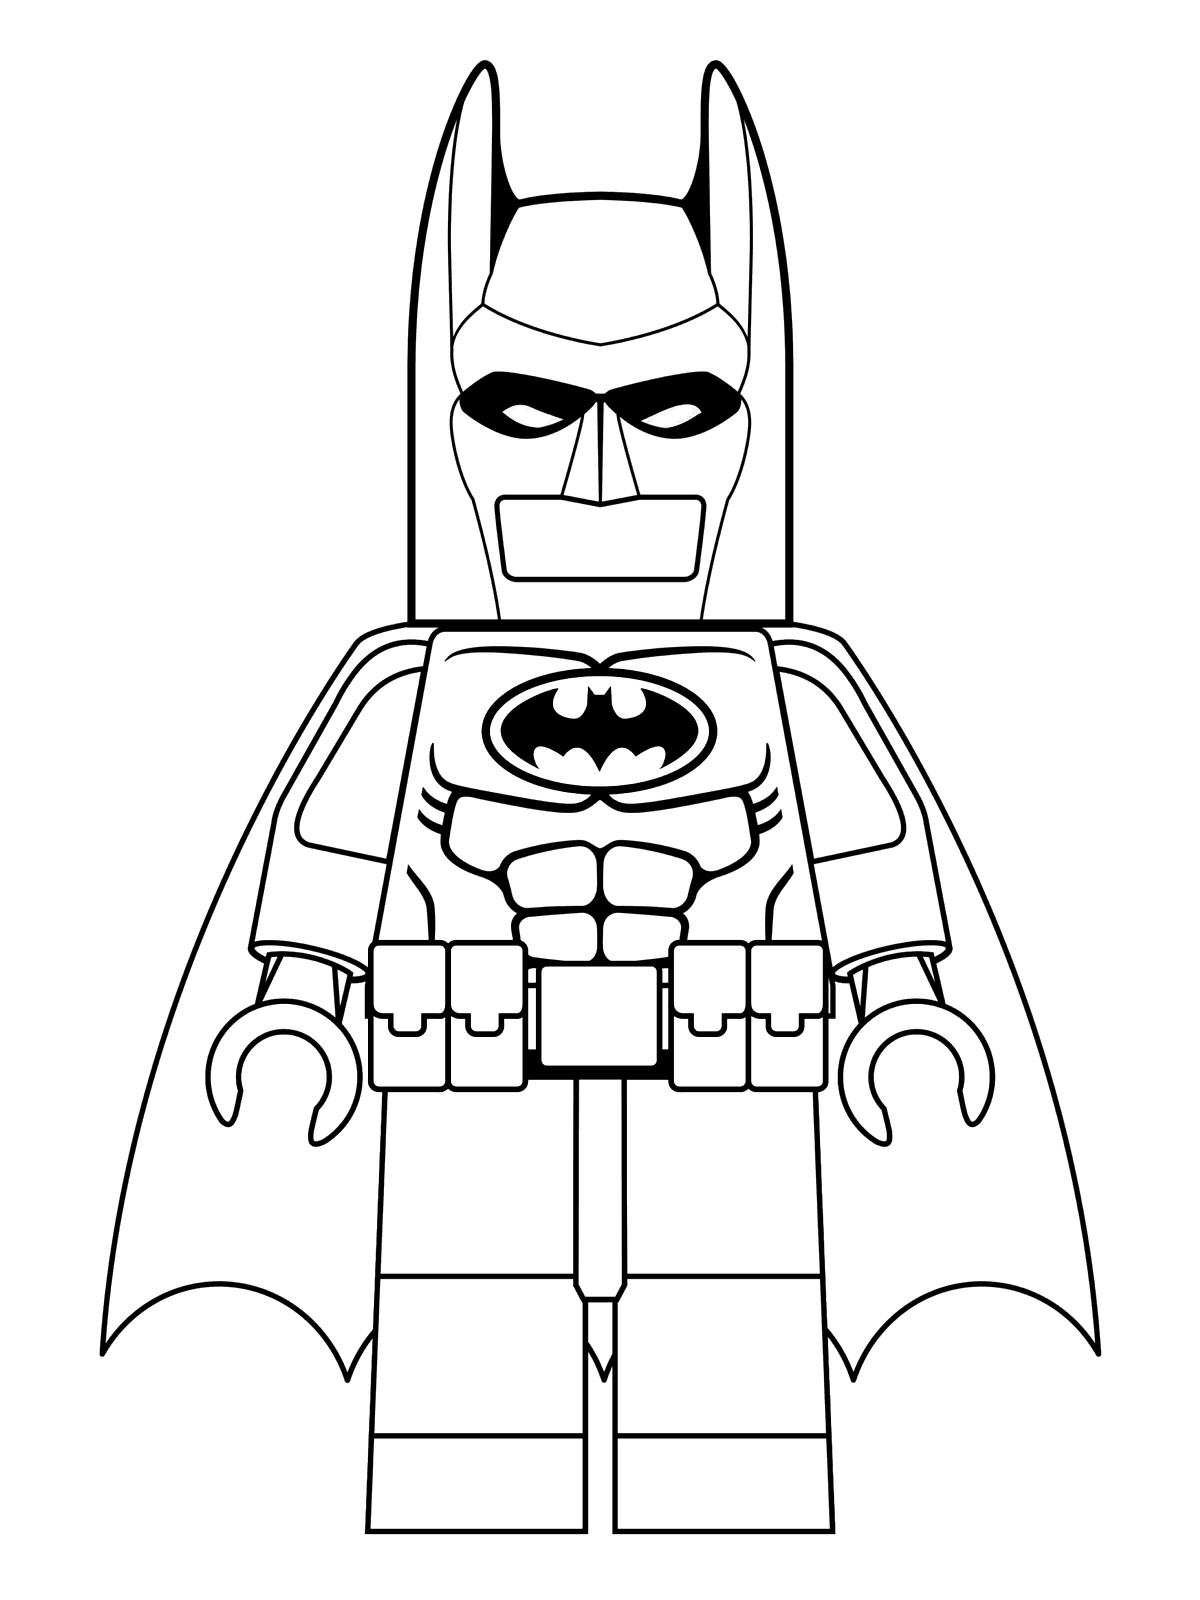 Malvorlage - Lego batman ausmalbilder axckv